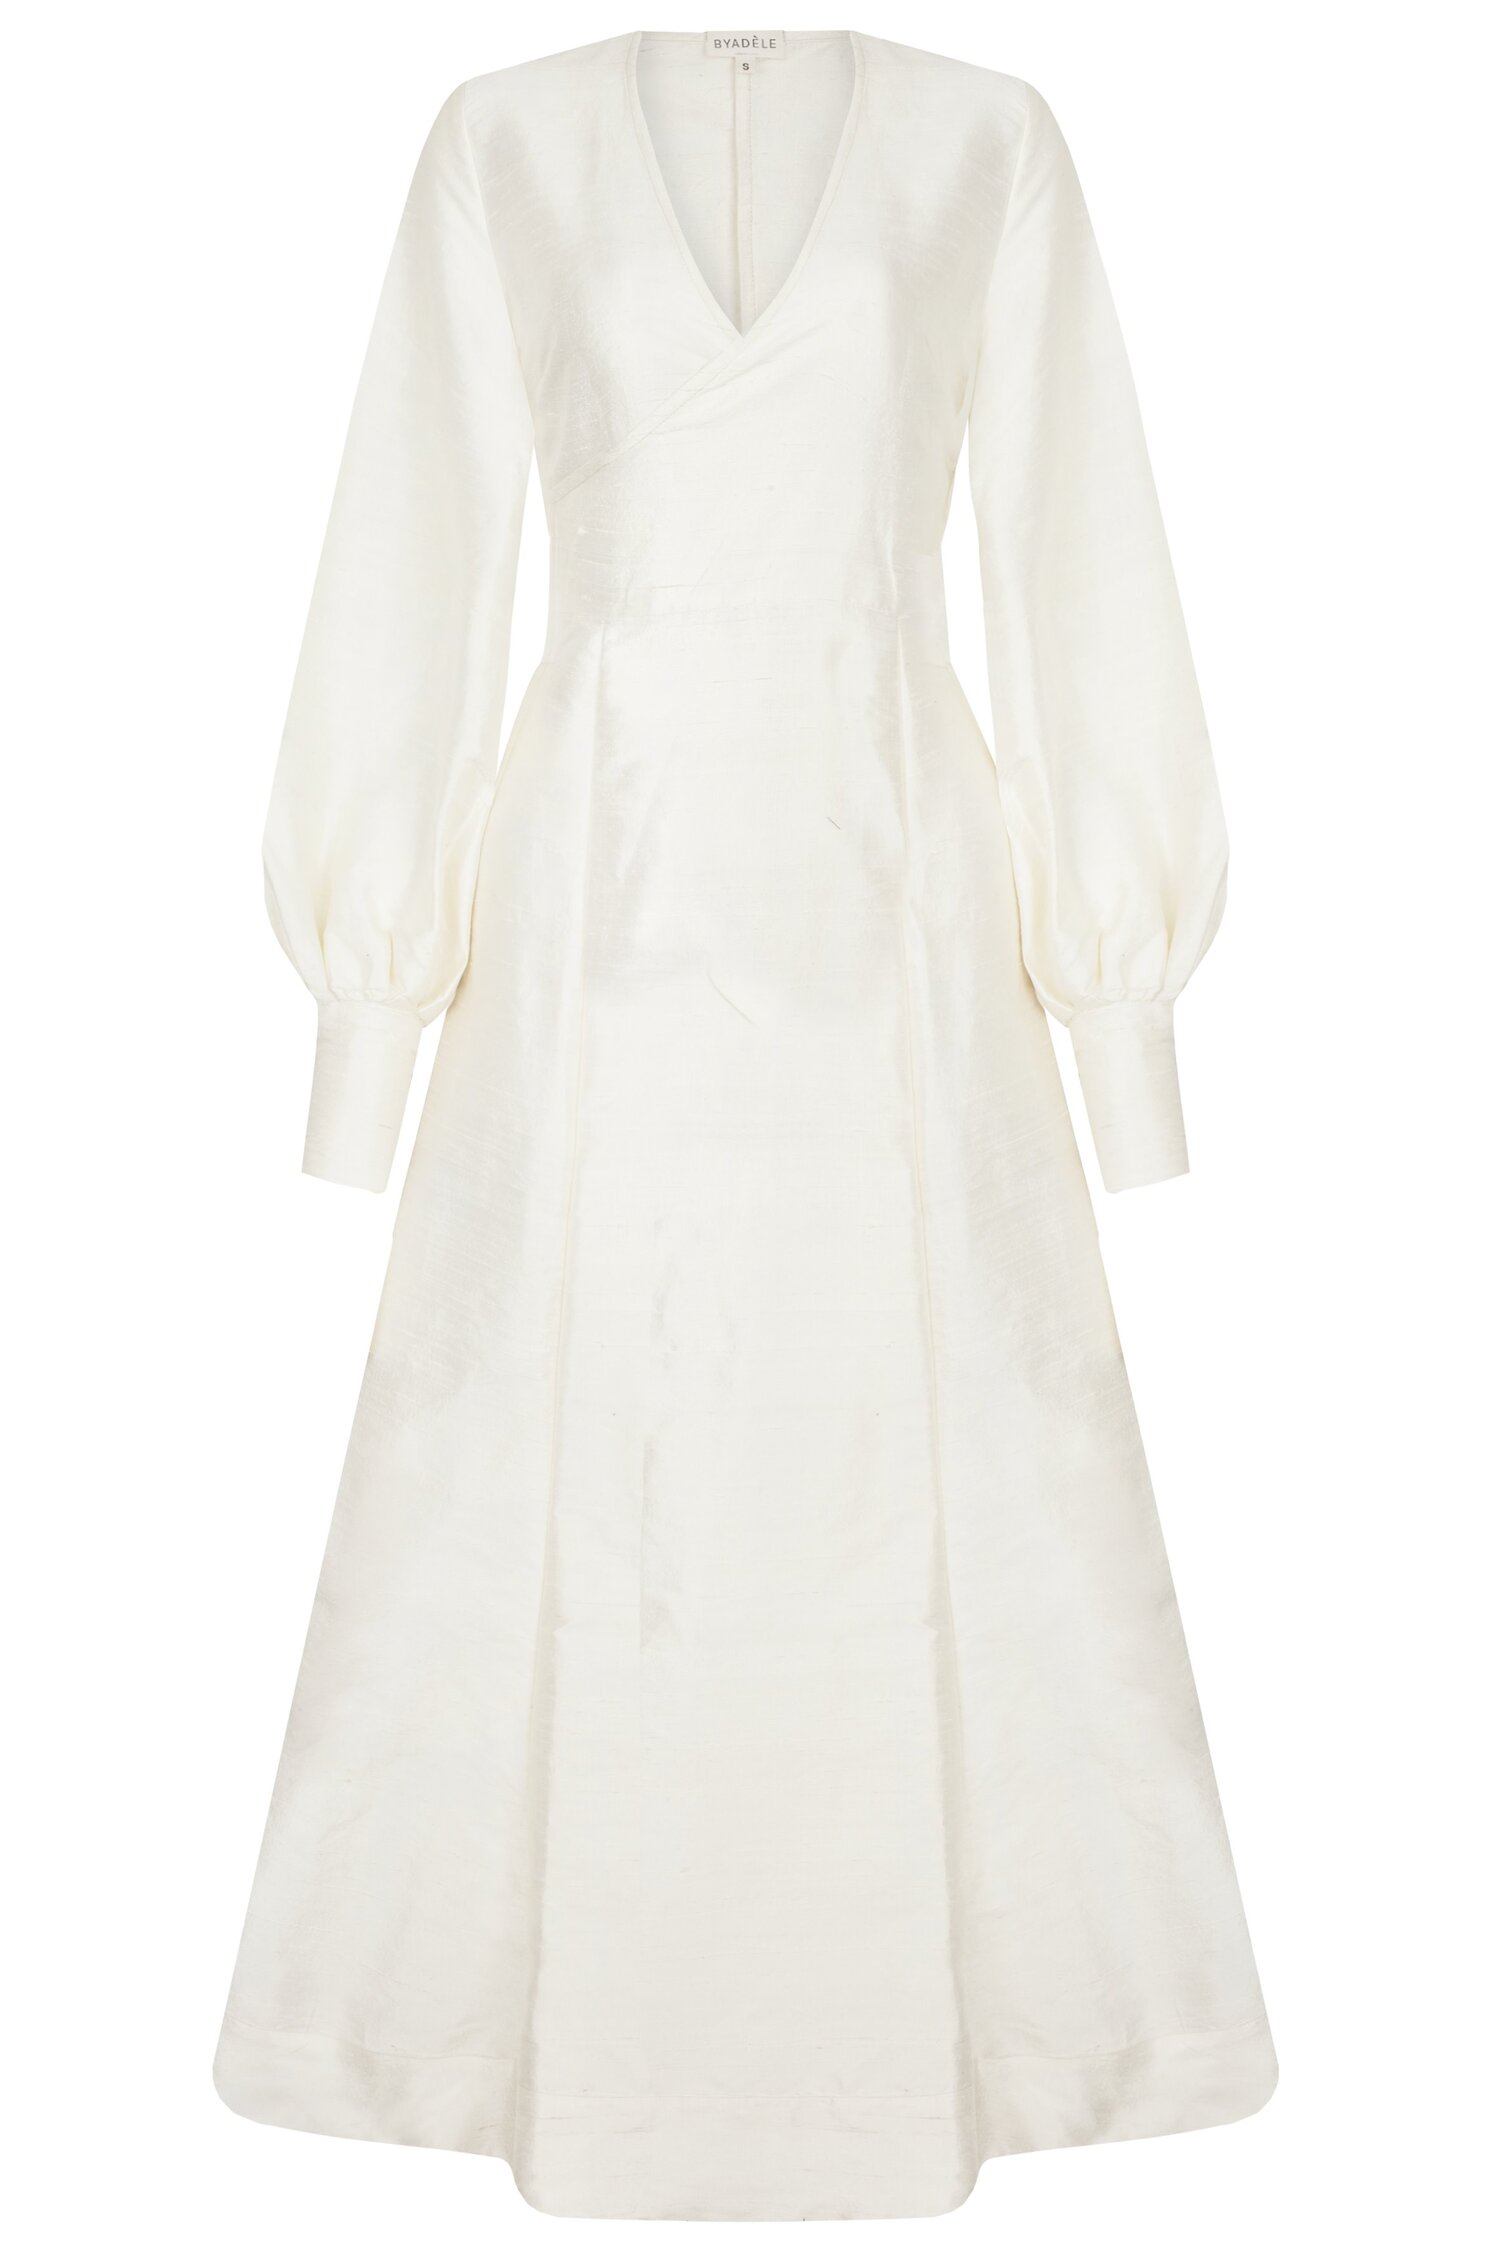 BYADÈLE — classic bridal dress with